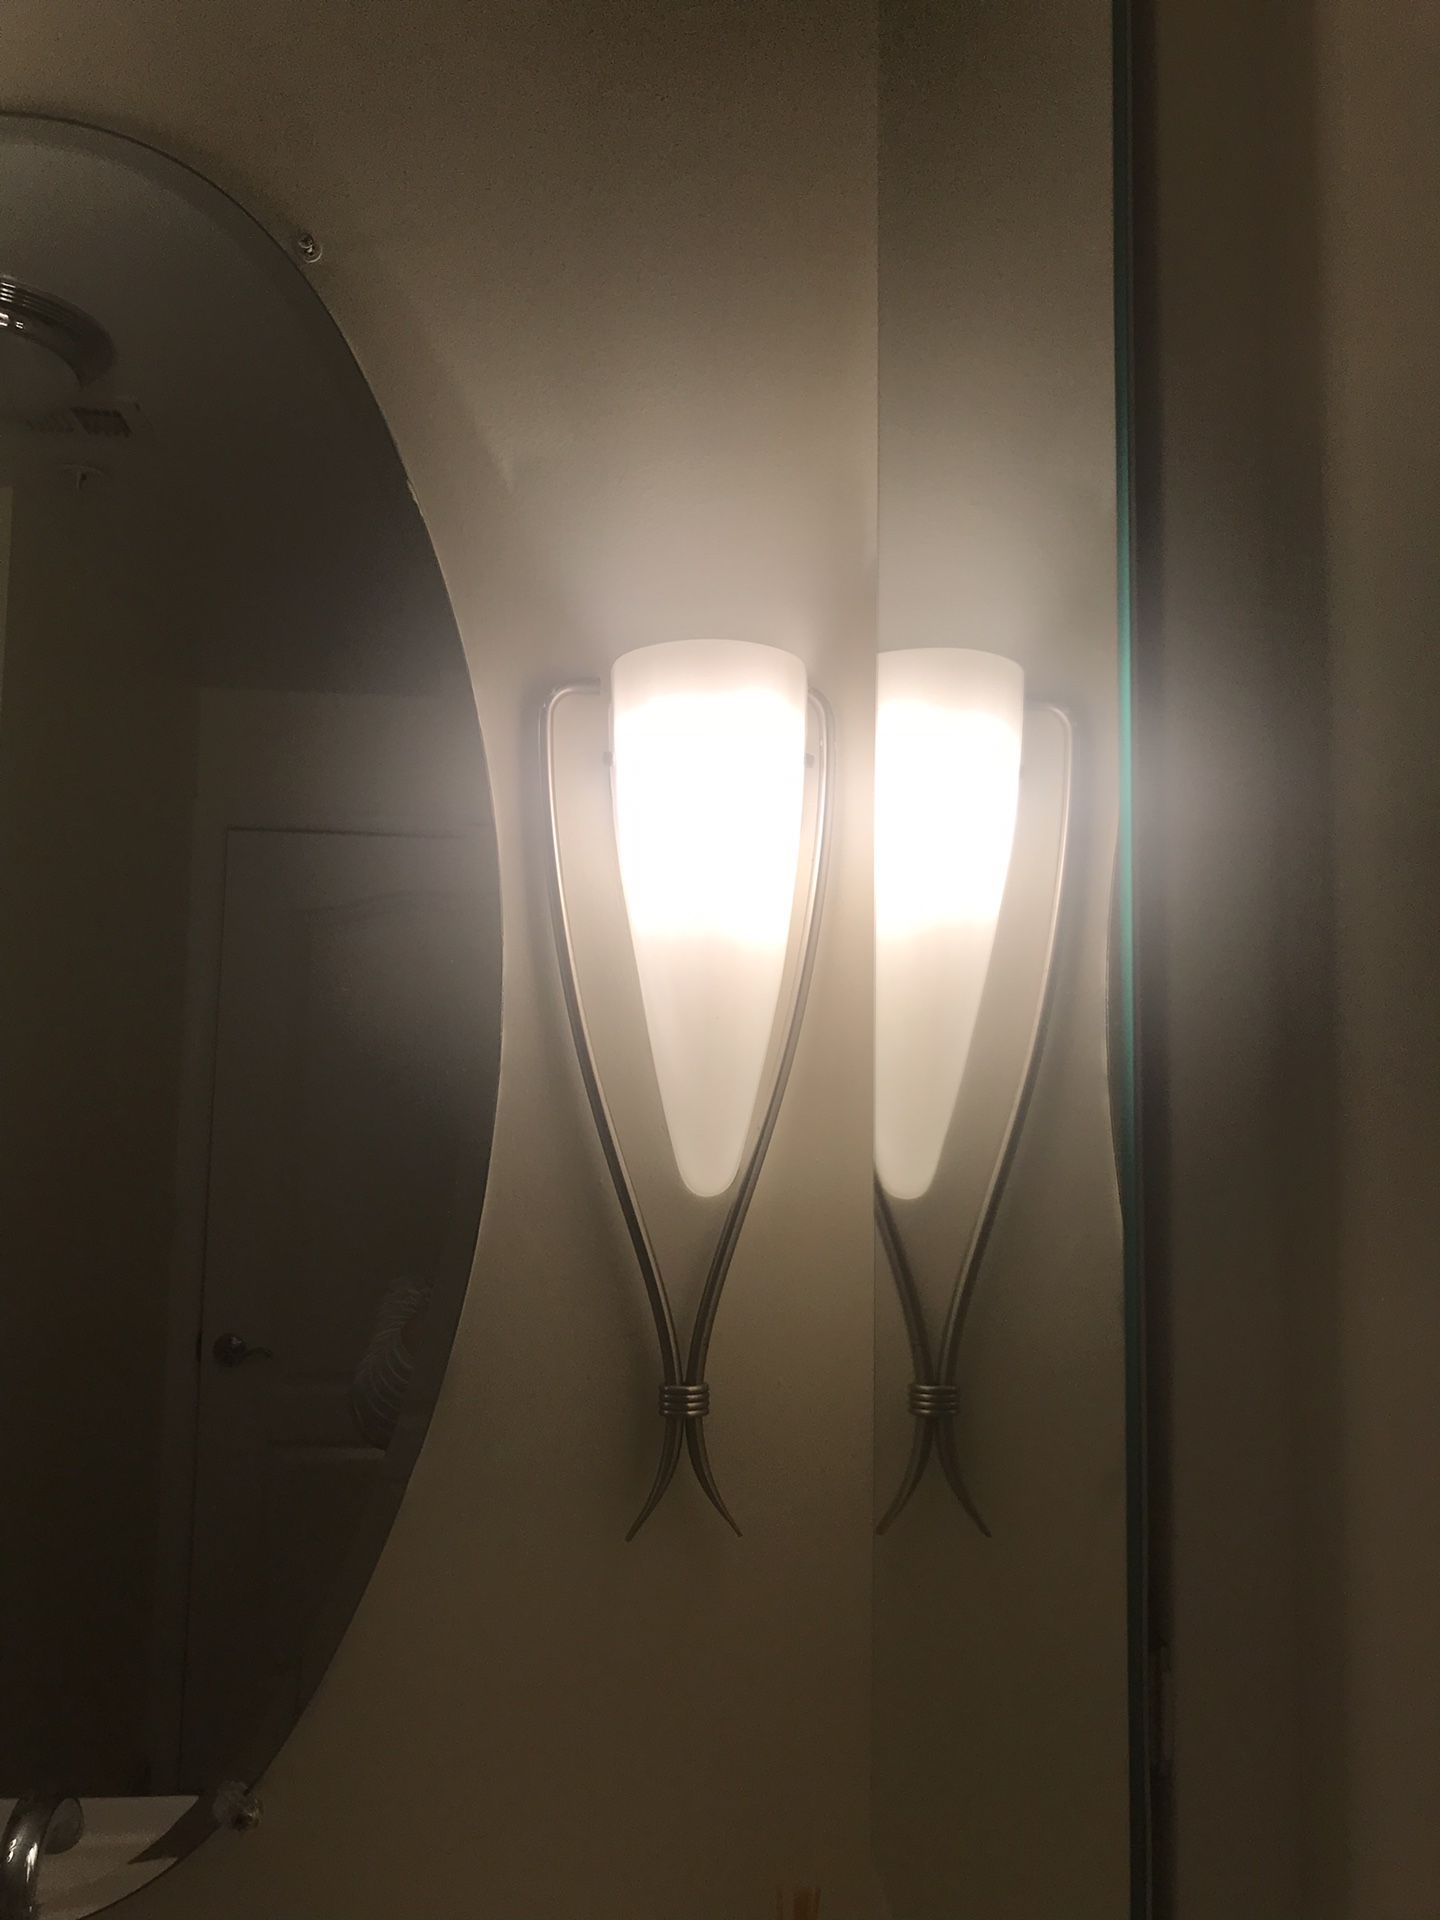 Two wall sconces - bathroom lighting